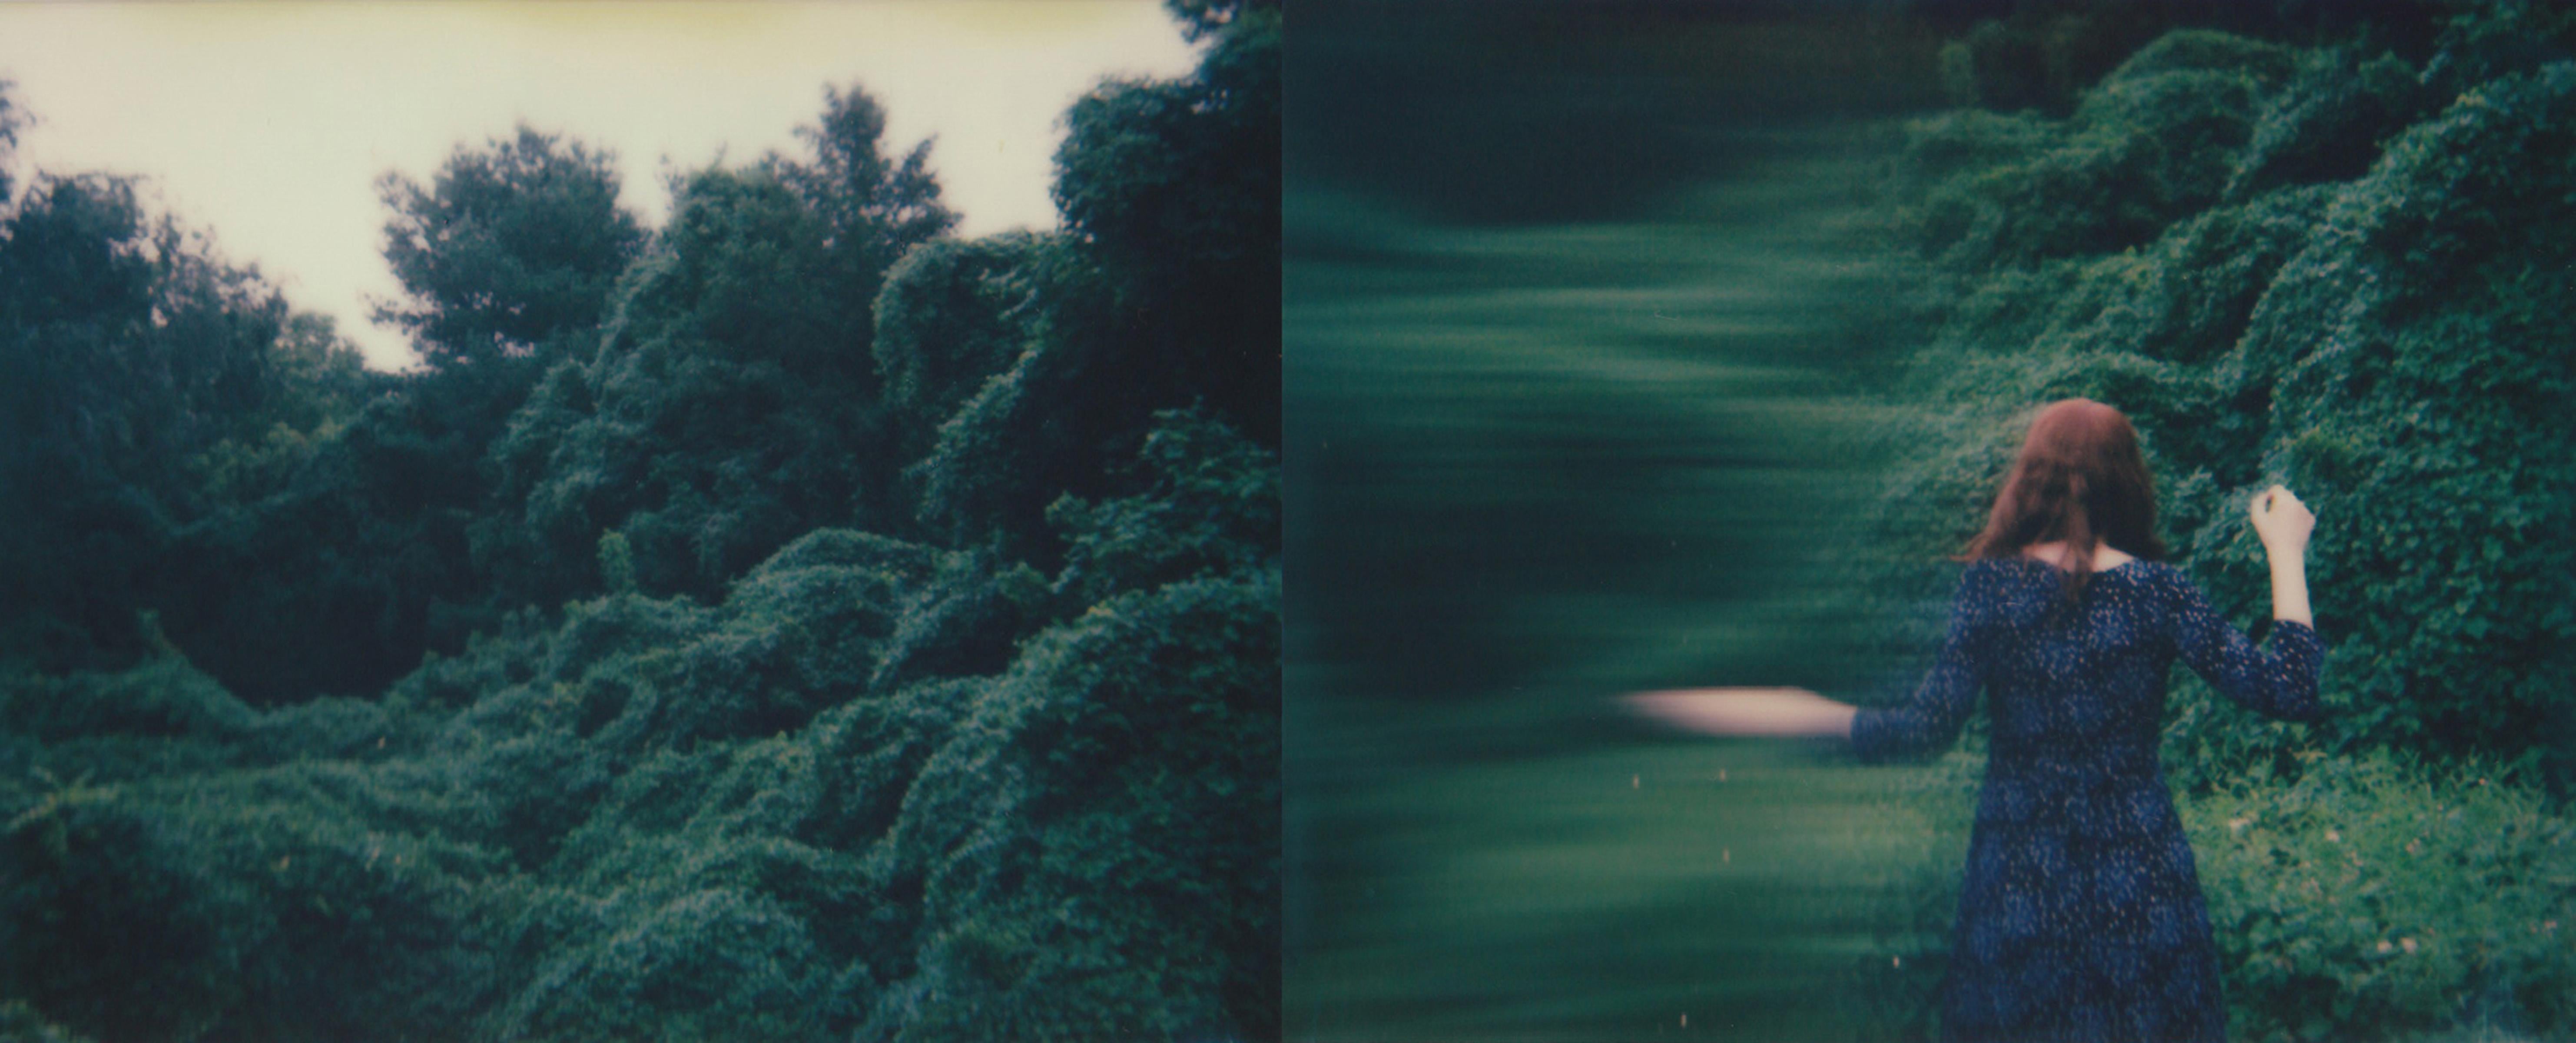 Lisa Toboz Color Photograph - Dwell Series - Contemporary, Figurative, Woman, Landscape, Polaroid, Photograph